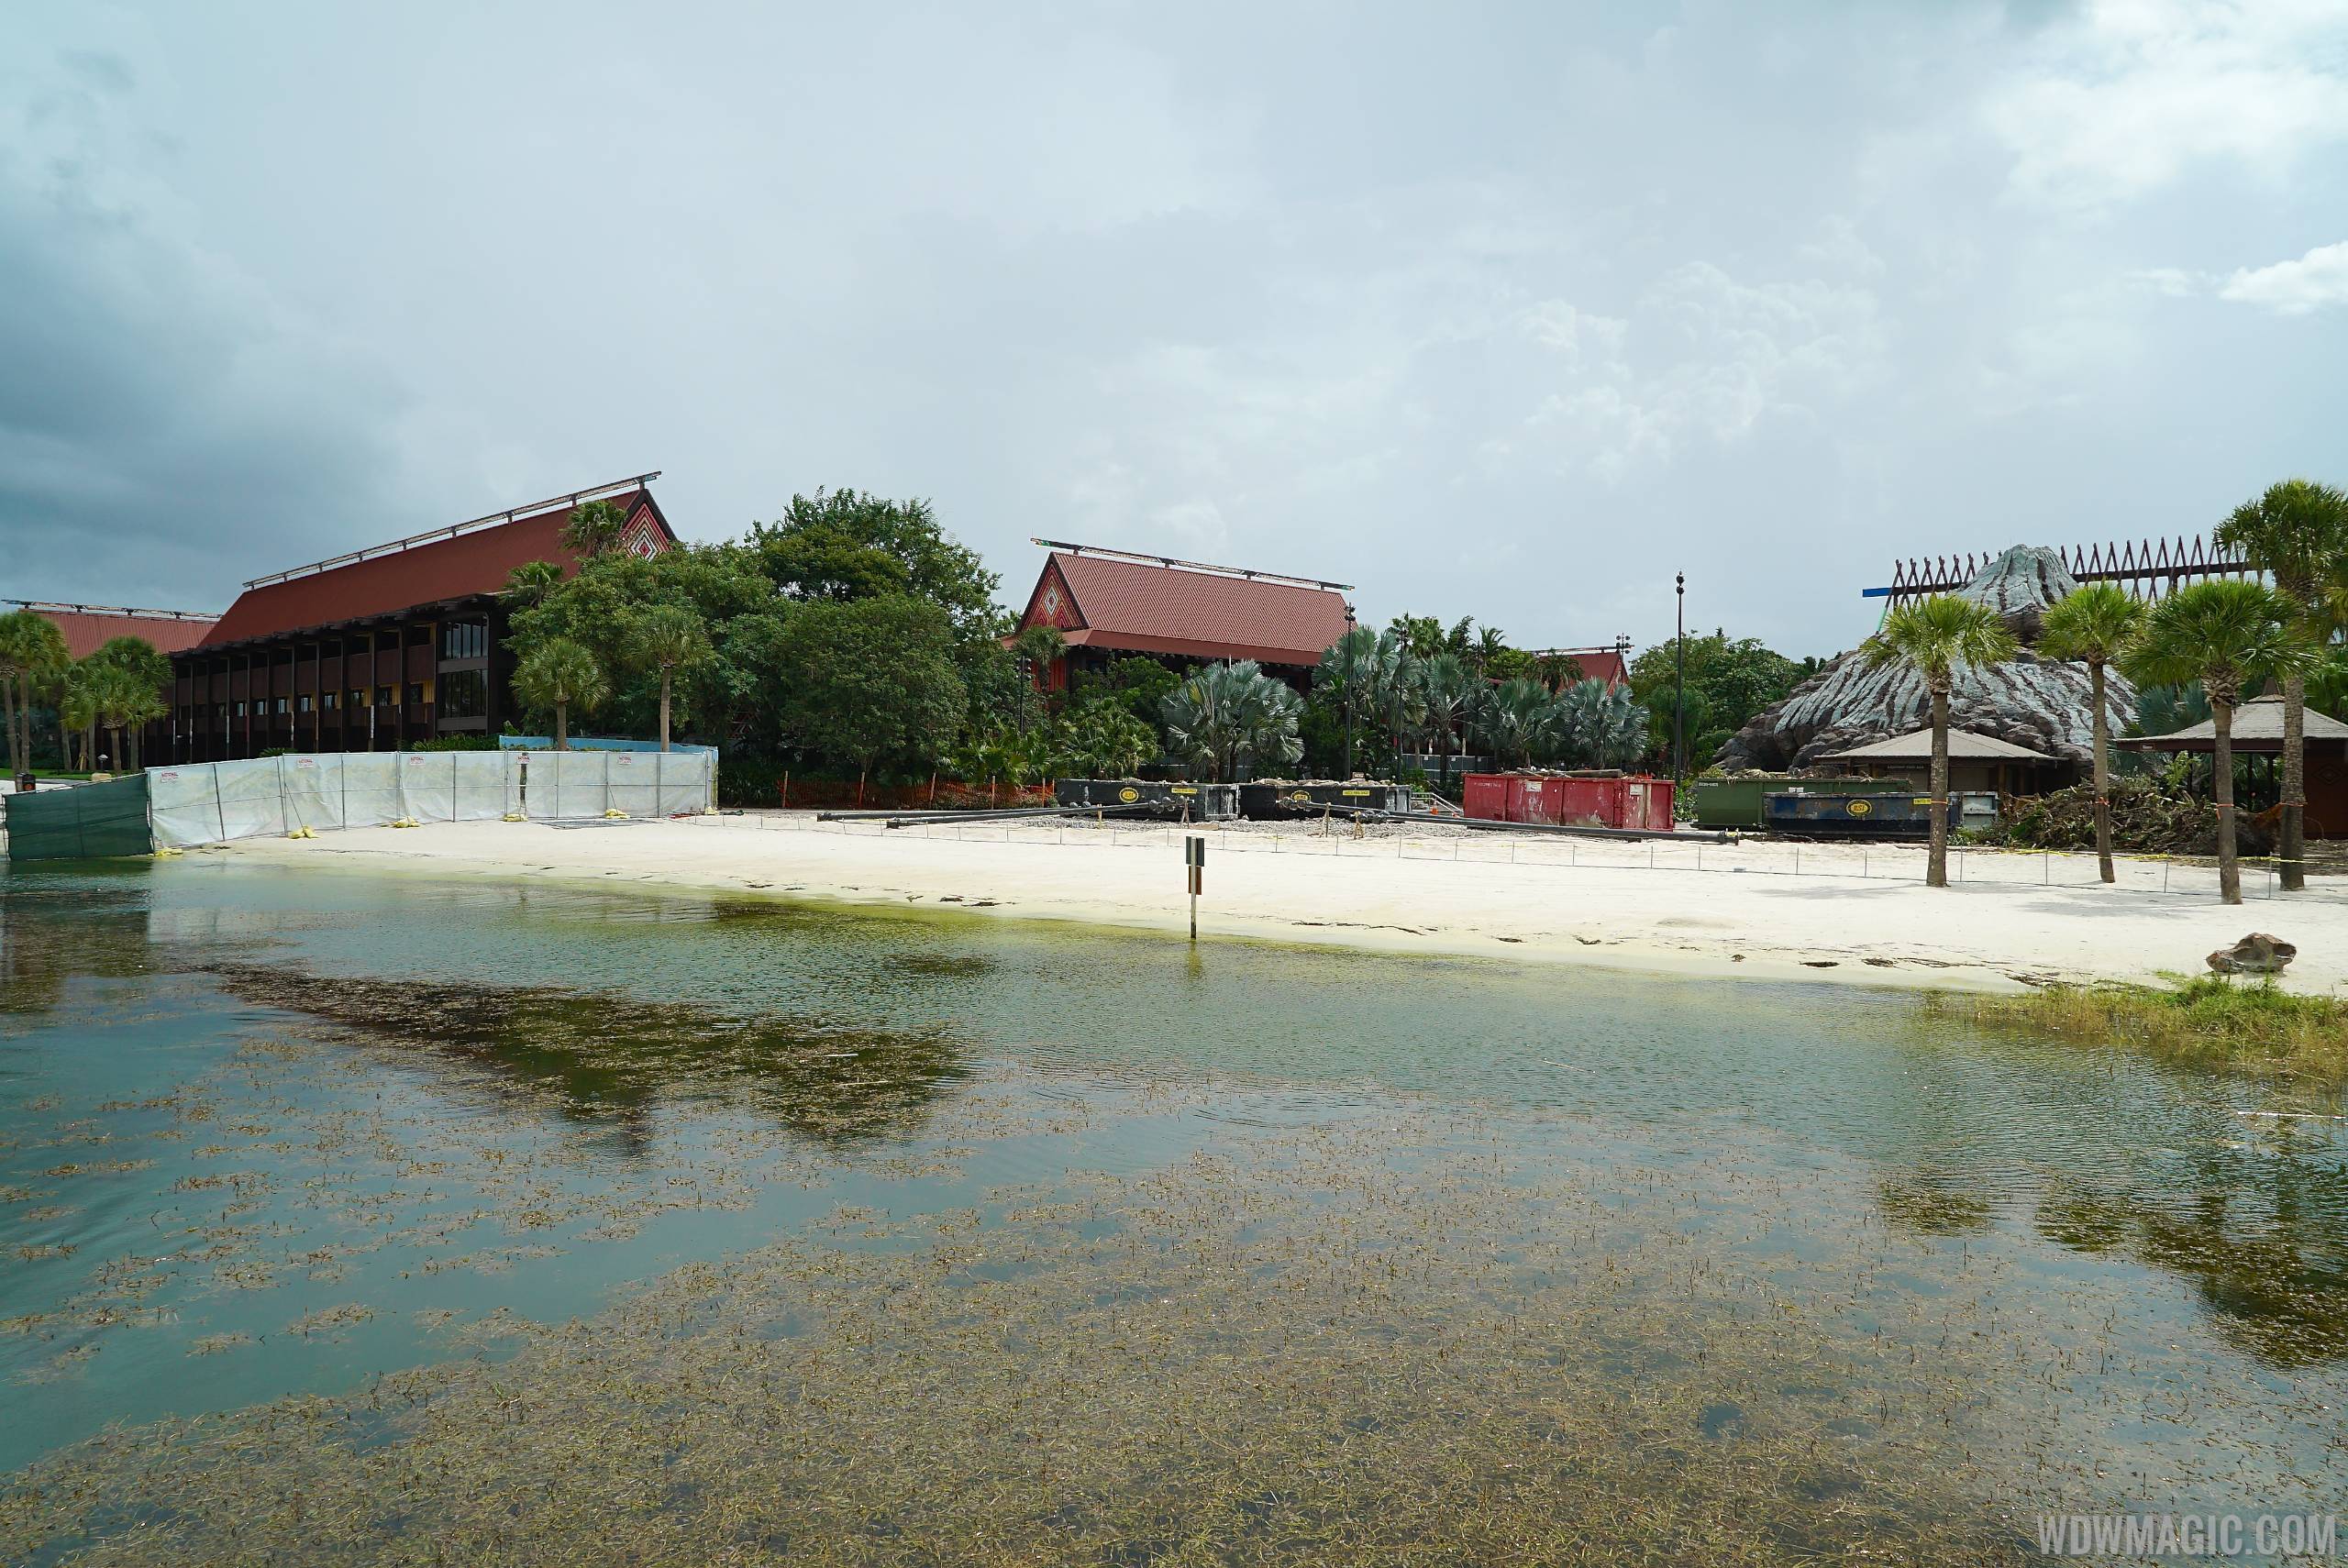 PHOTOS - A look at the construction around the main pool at Disney's Polynesian Resort